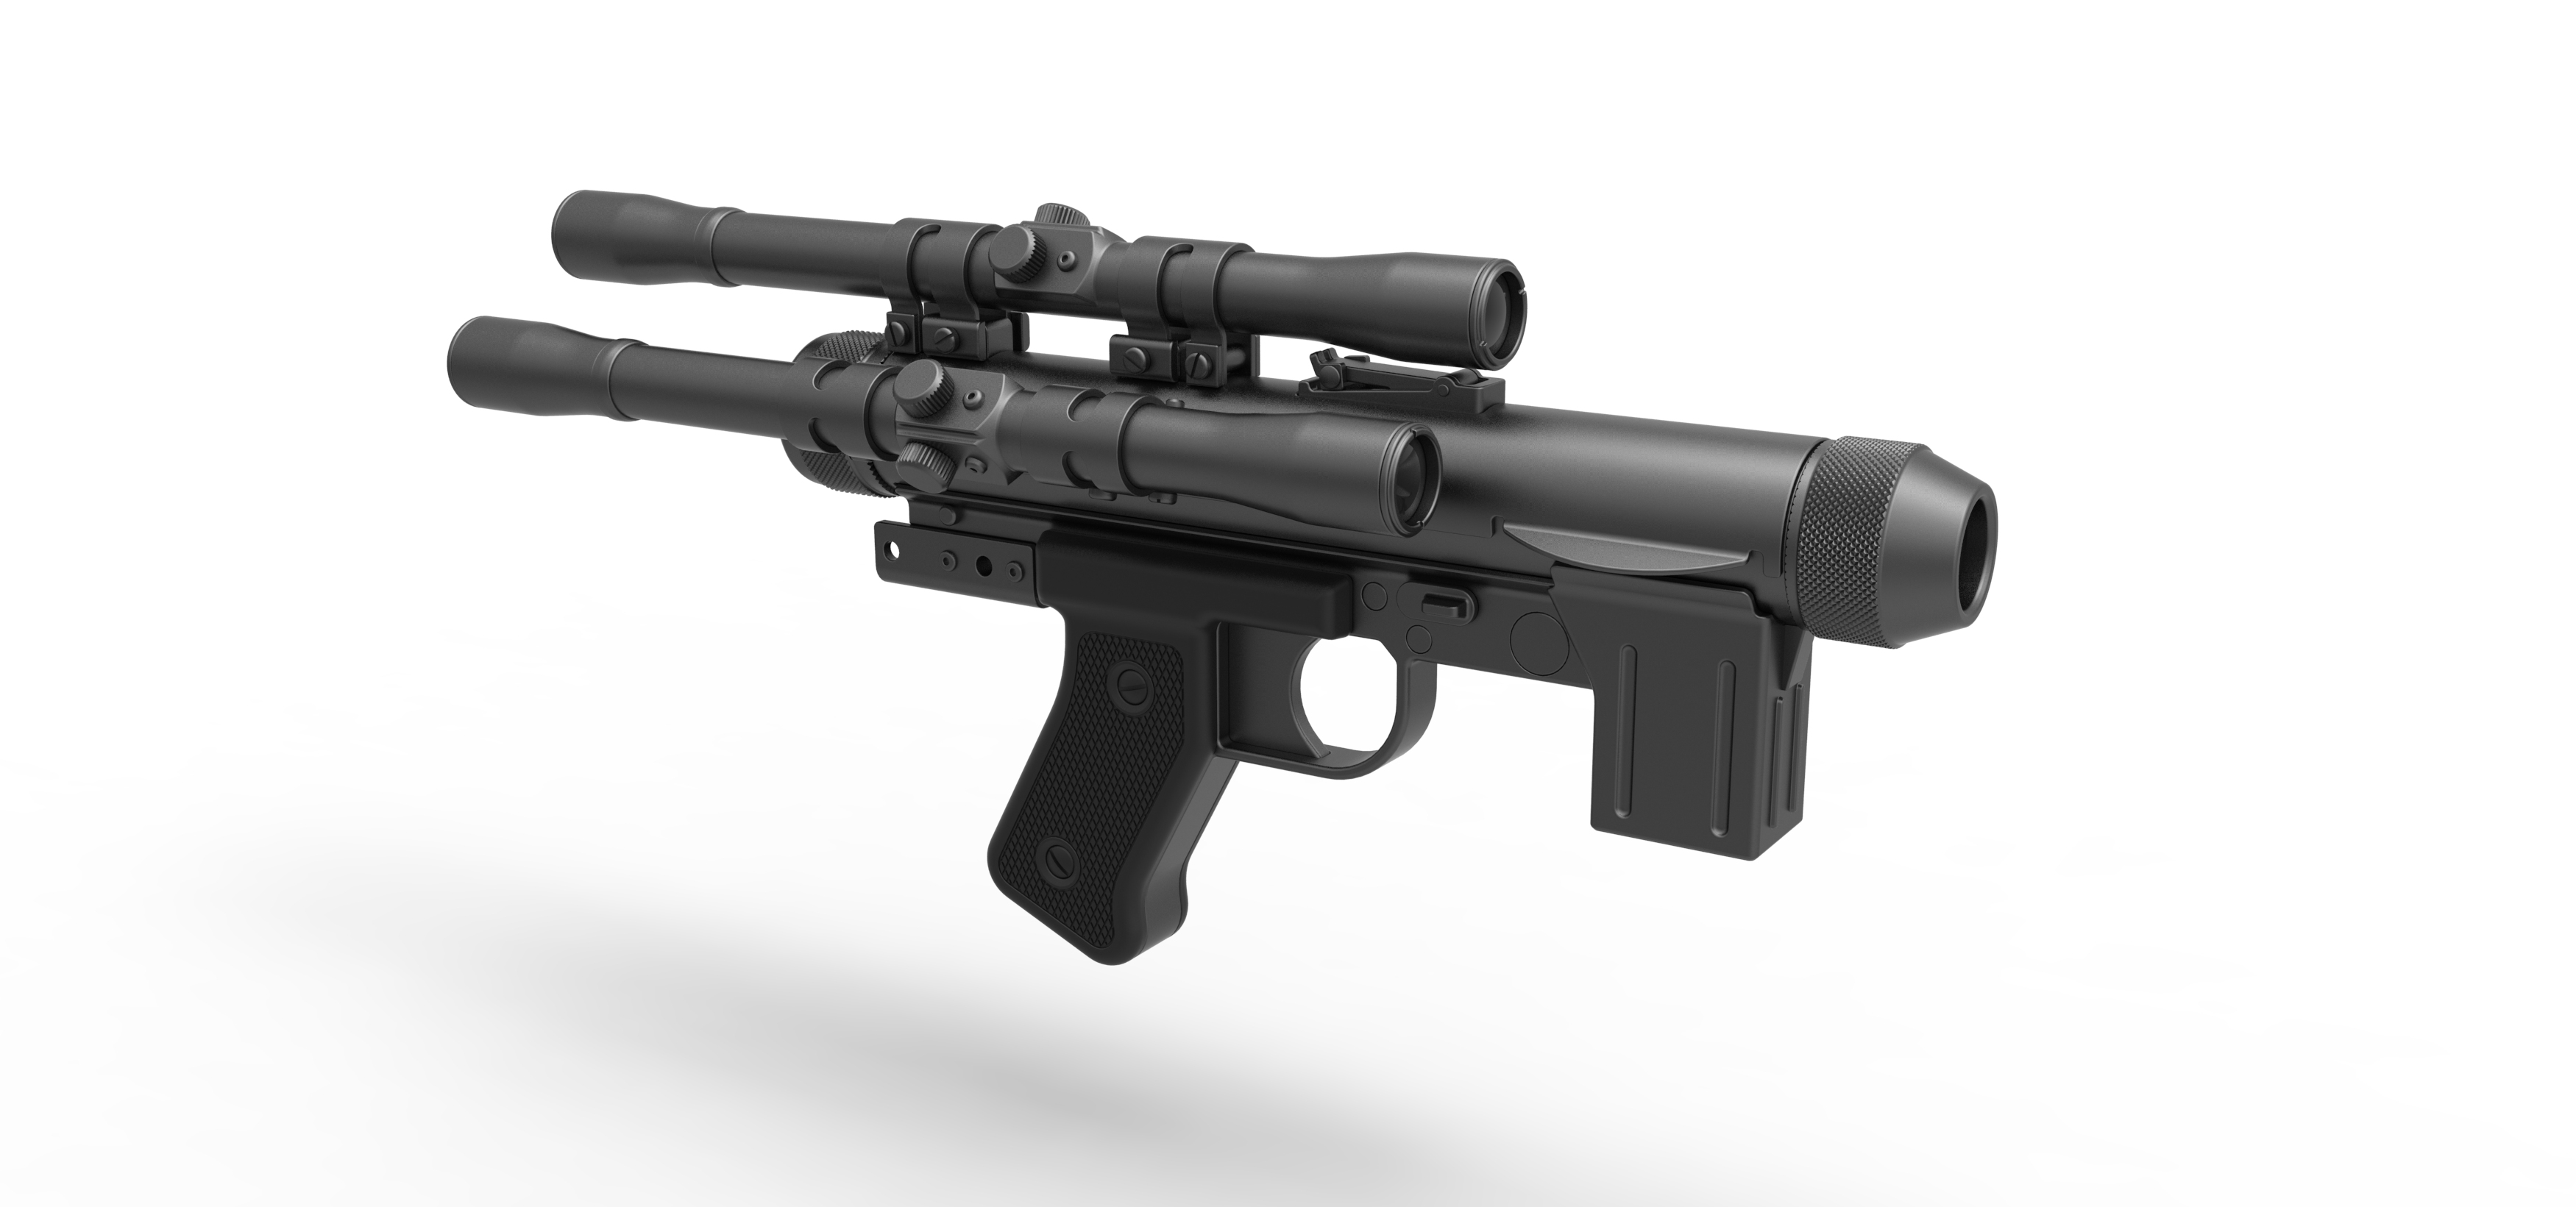 Blaster pistol SE-14C